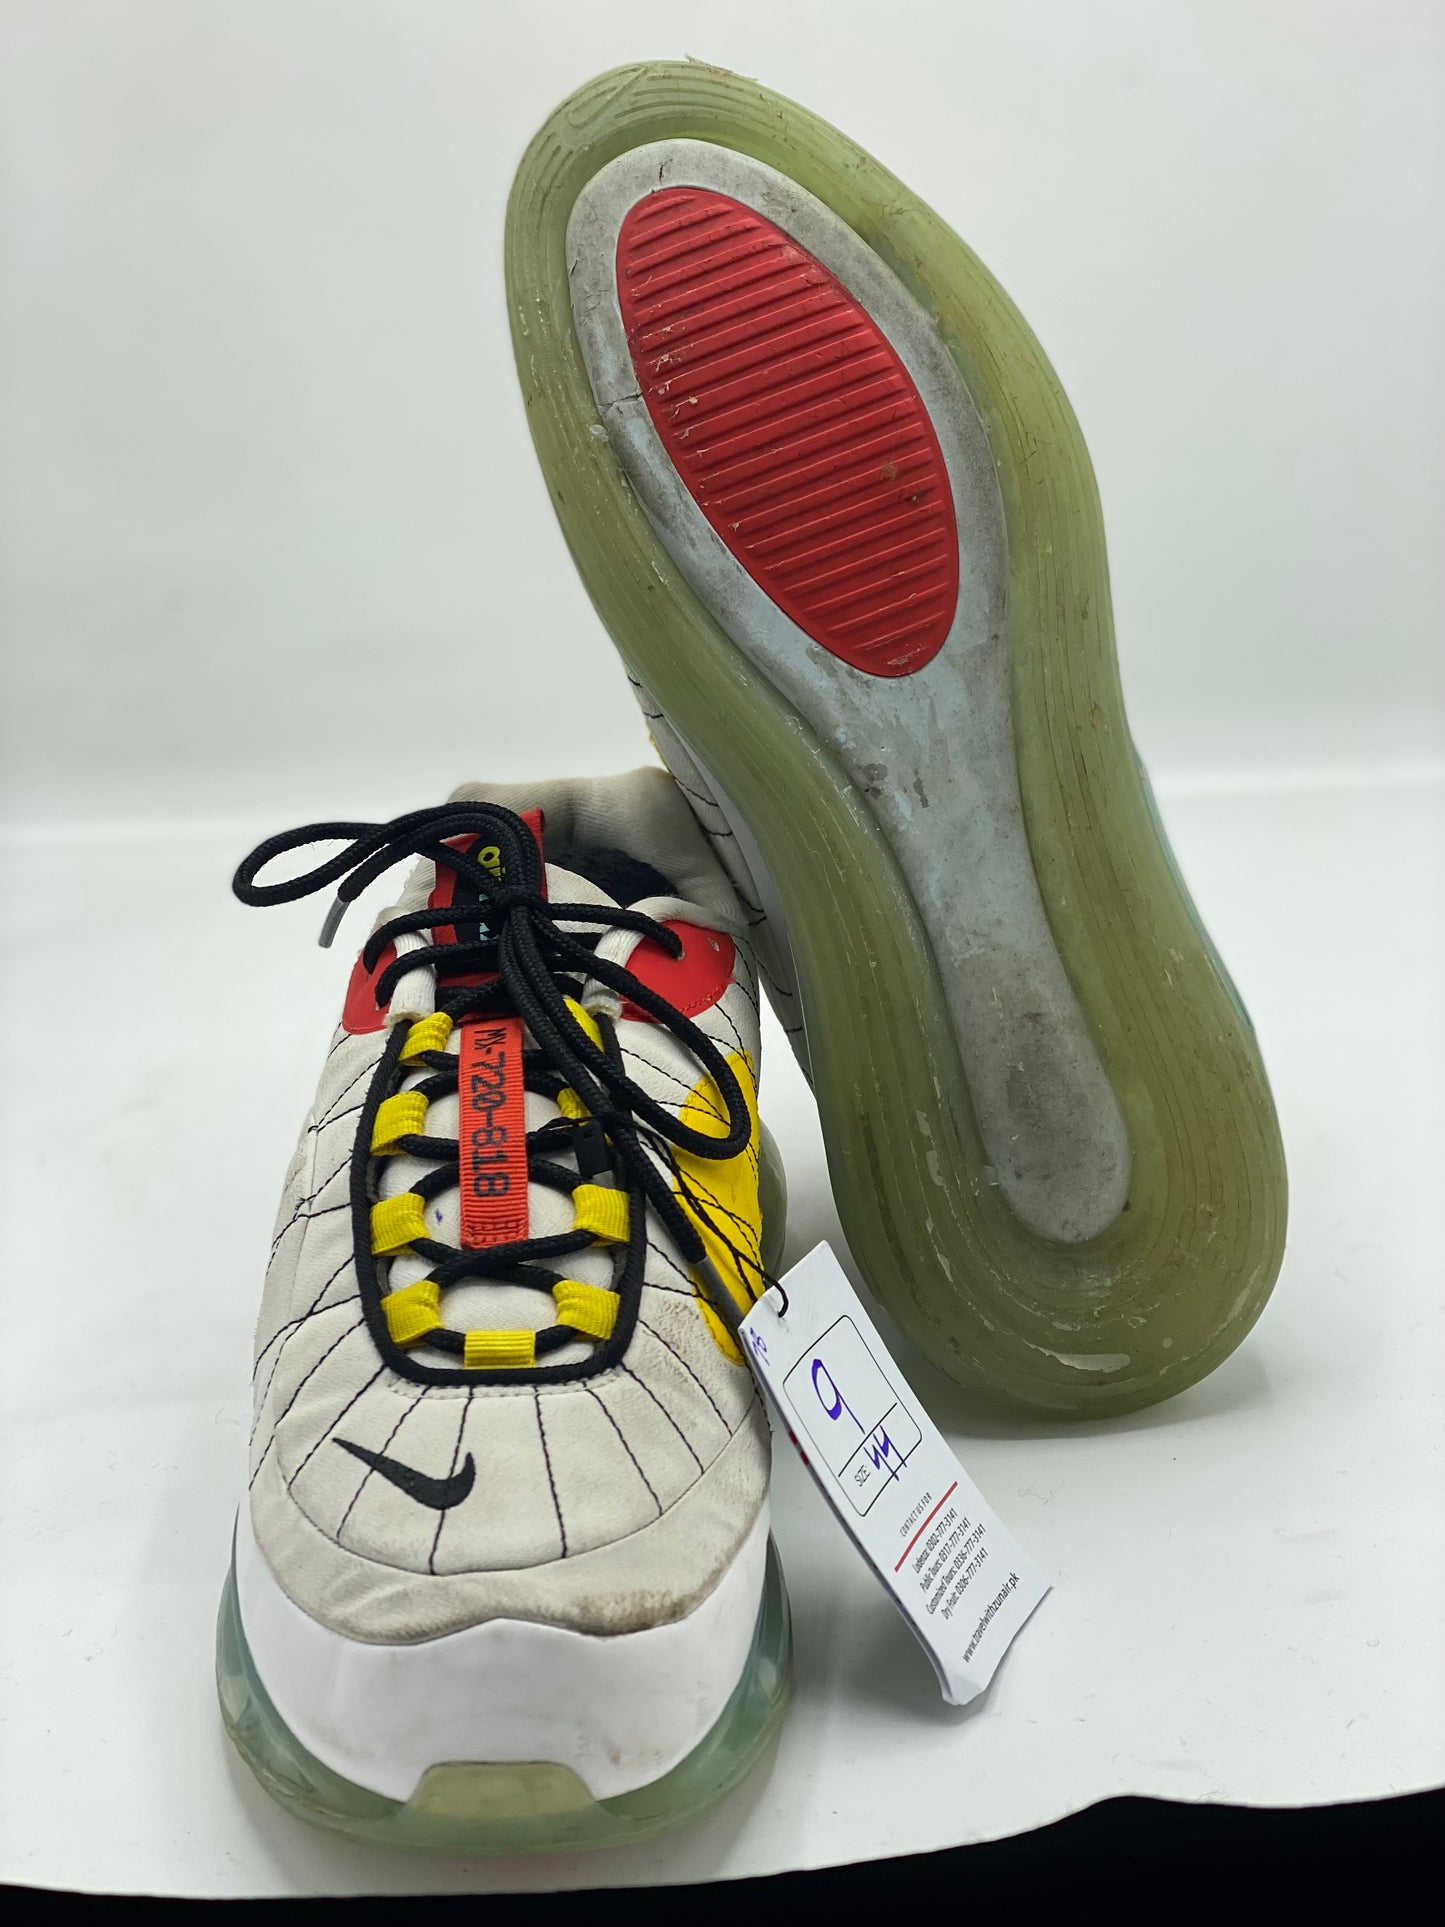 NIKE Men's Mx-720-818 Running Shoe, White Black Yellow Red